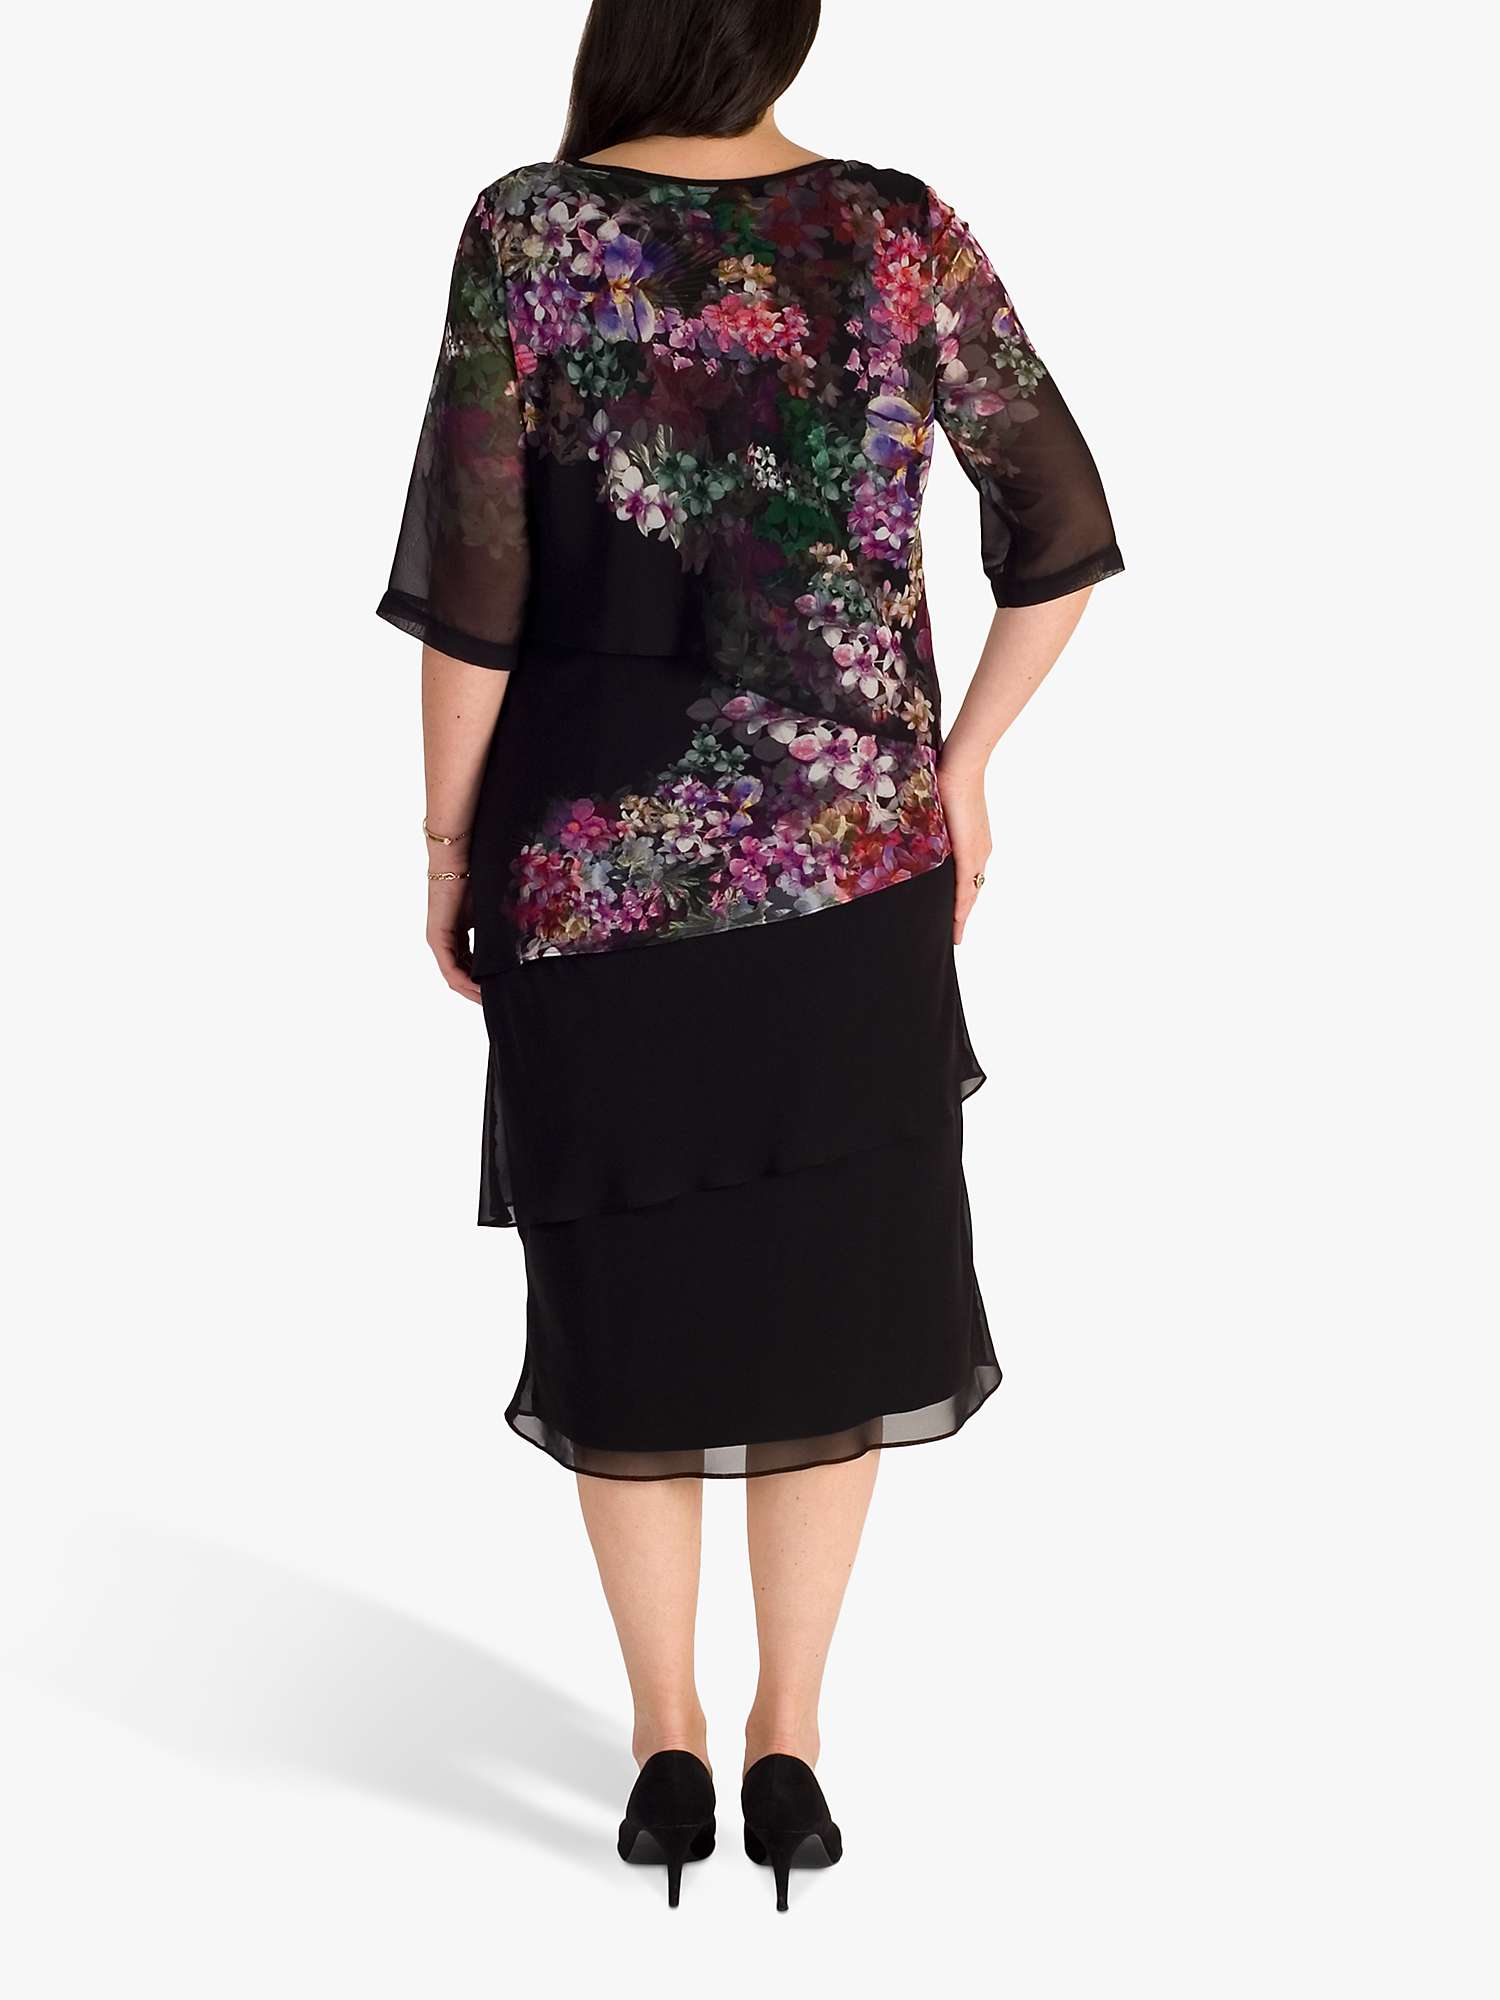 Buy chesca Floral Print Layered Chiffon Dress, Black/Grape Online at johnlewis.com